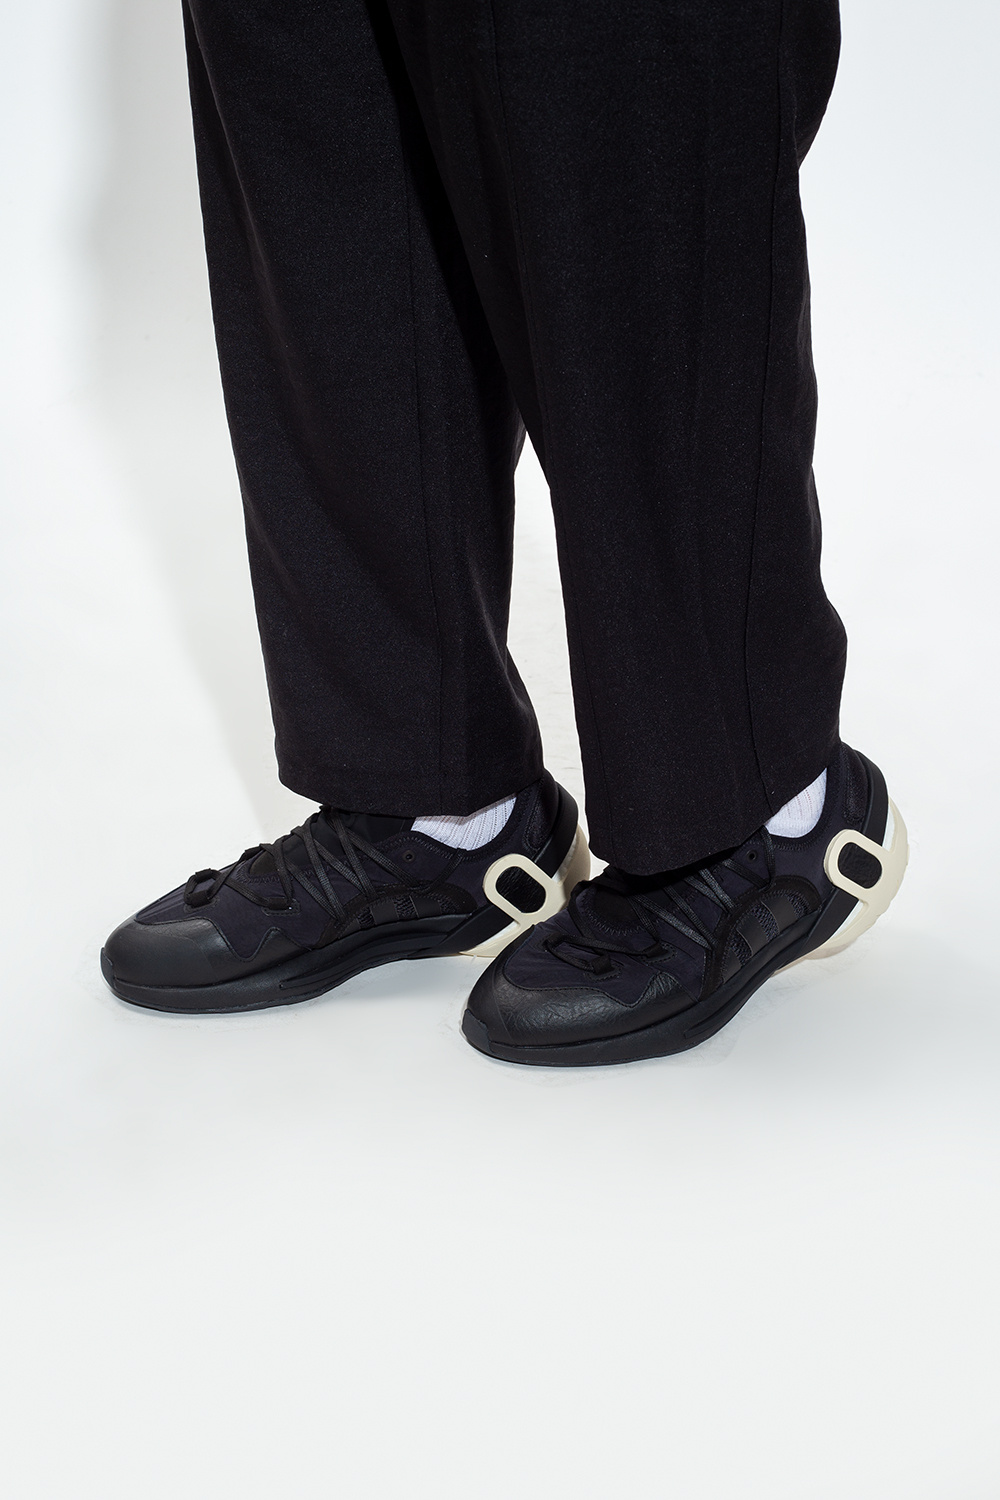 Y-3 Yohji Yamamoto ‘Idoso Boost’ sneakers | Men's Shoes | Vitkac